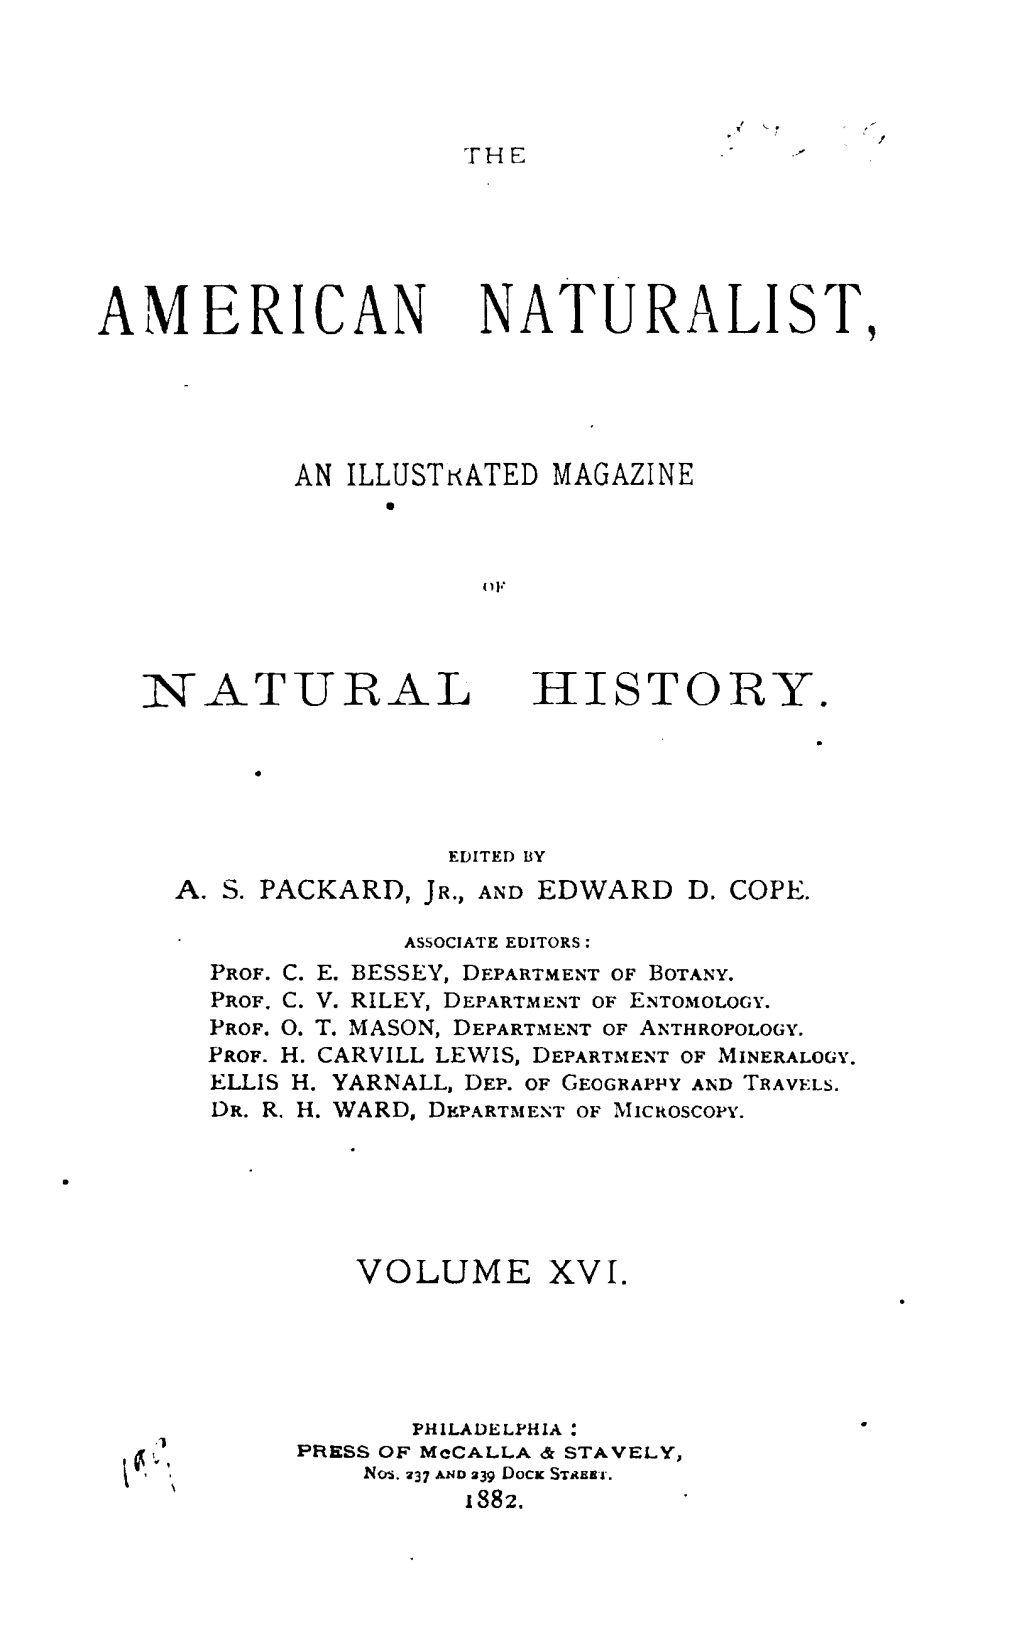 The American Naturalist